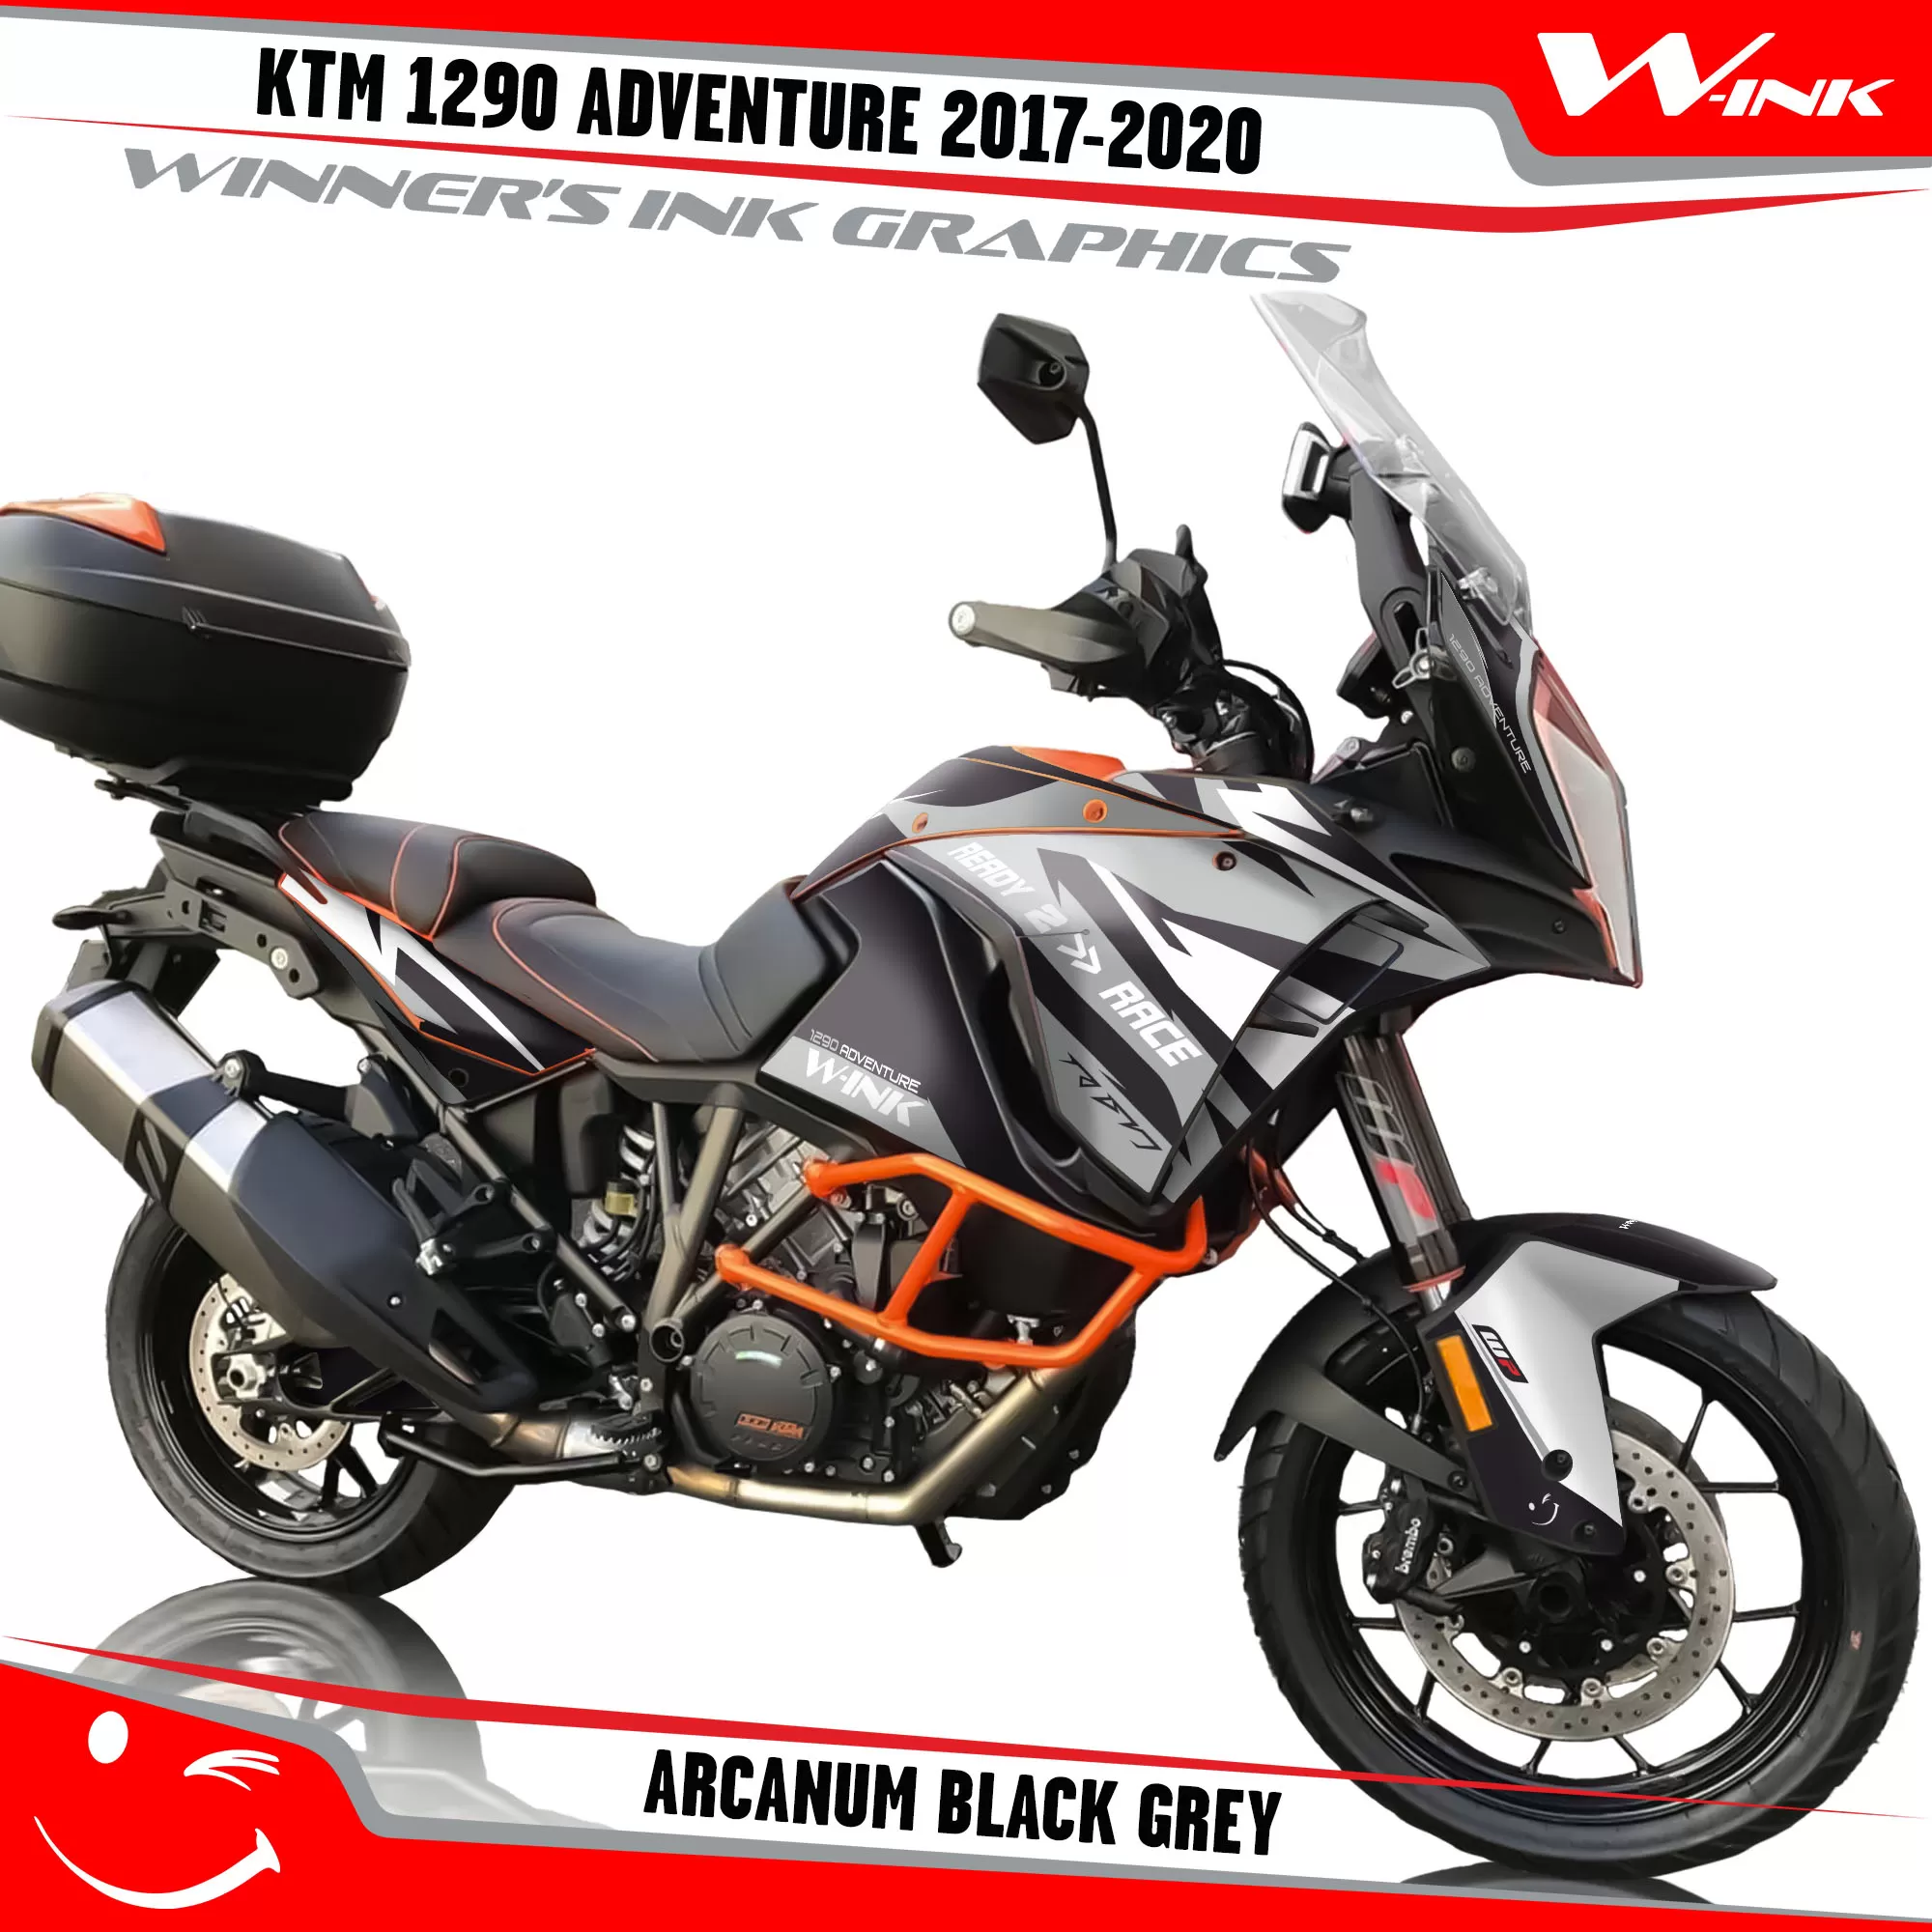 KTM-Adventure-1290-2017-2018-2019-2020-graphics-kit-and-decals-Arcanum-Black-Grey